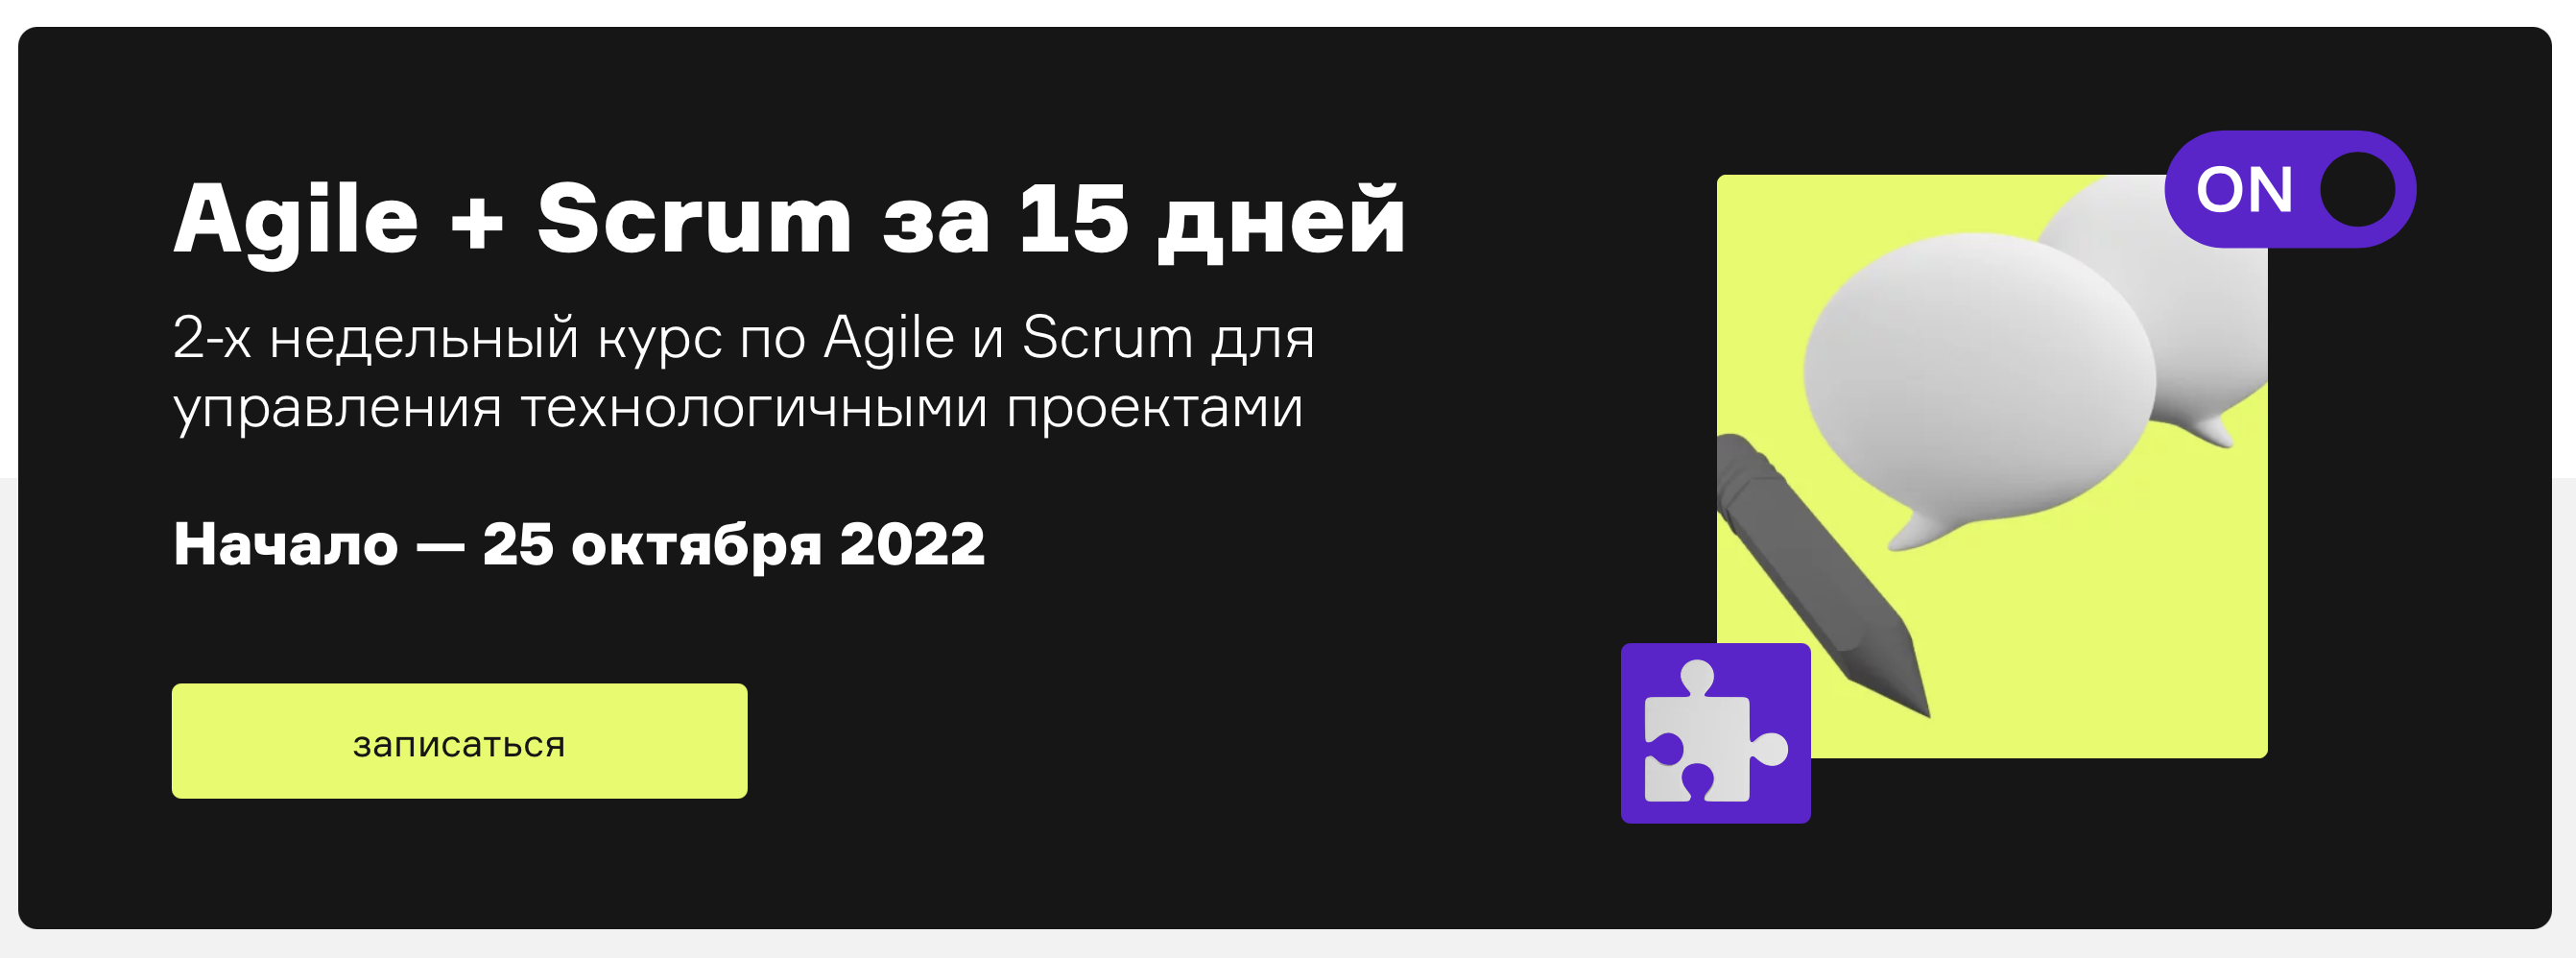 [Product University] Agile + Scrum за 15 дней